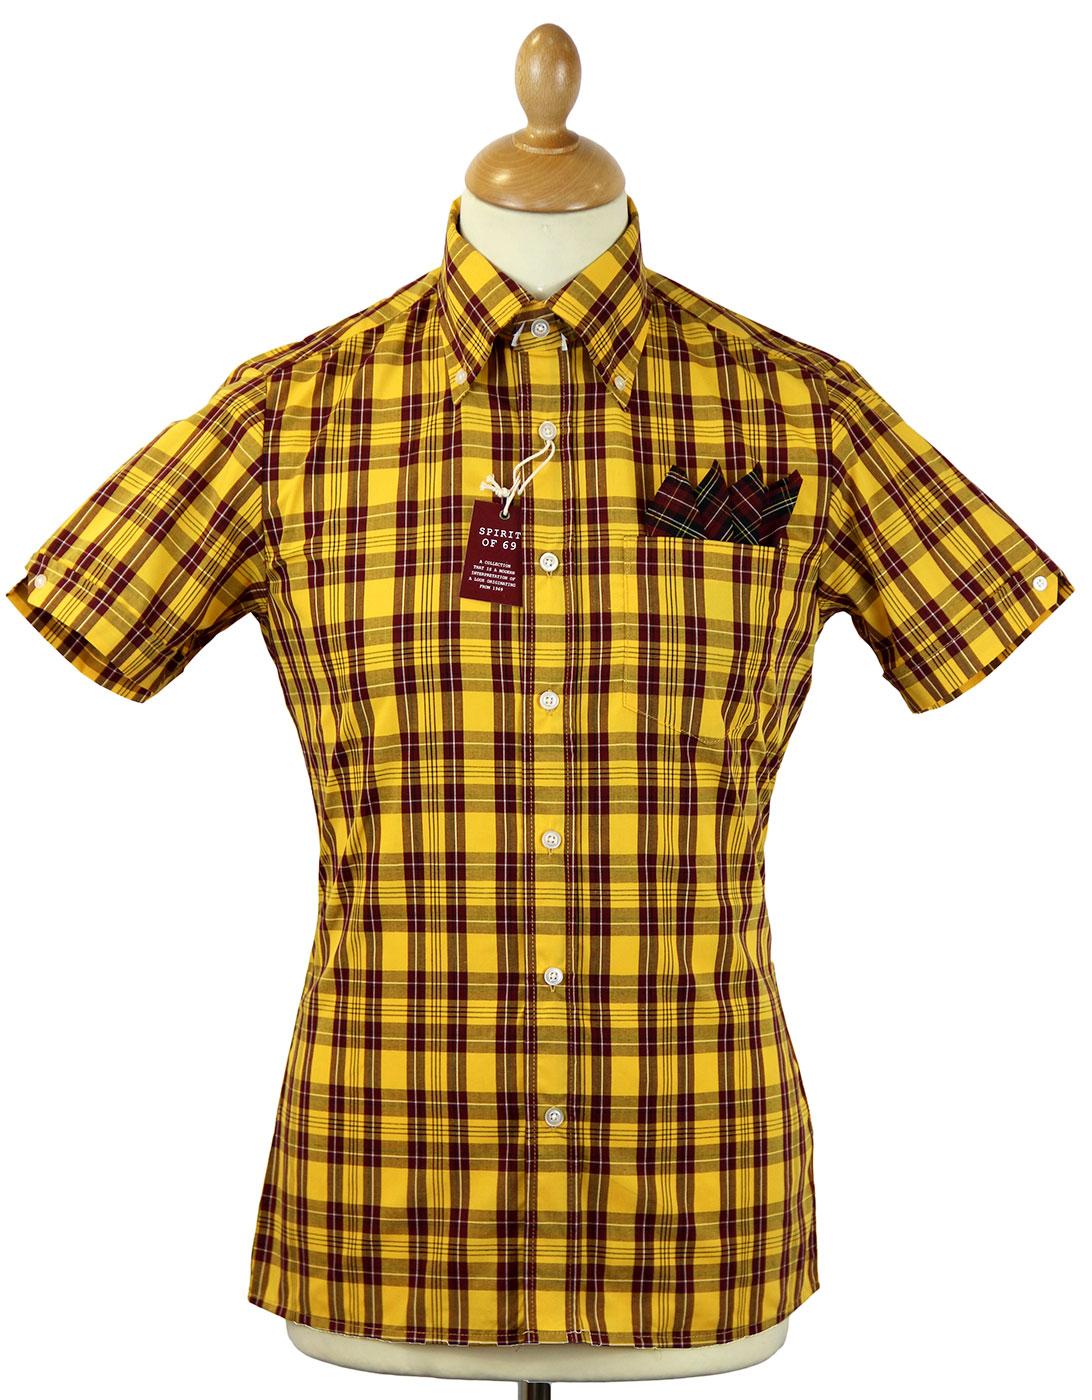 TRIMFIT Mens Retro Mod Tartan Shirt Yellow